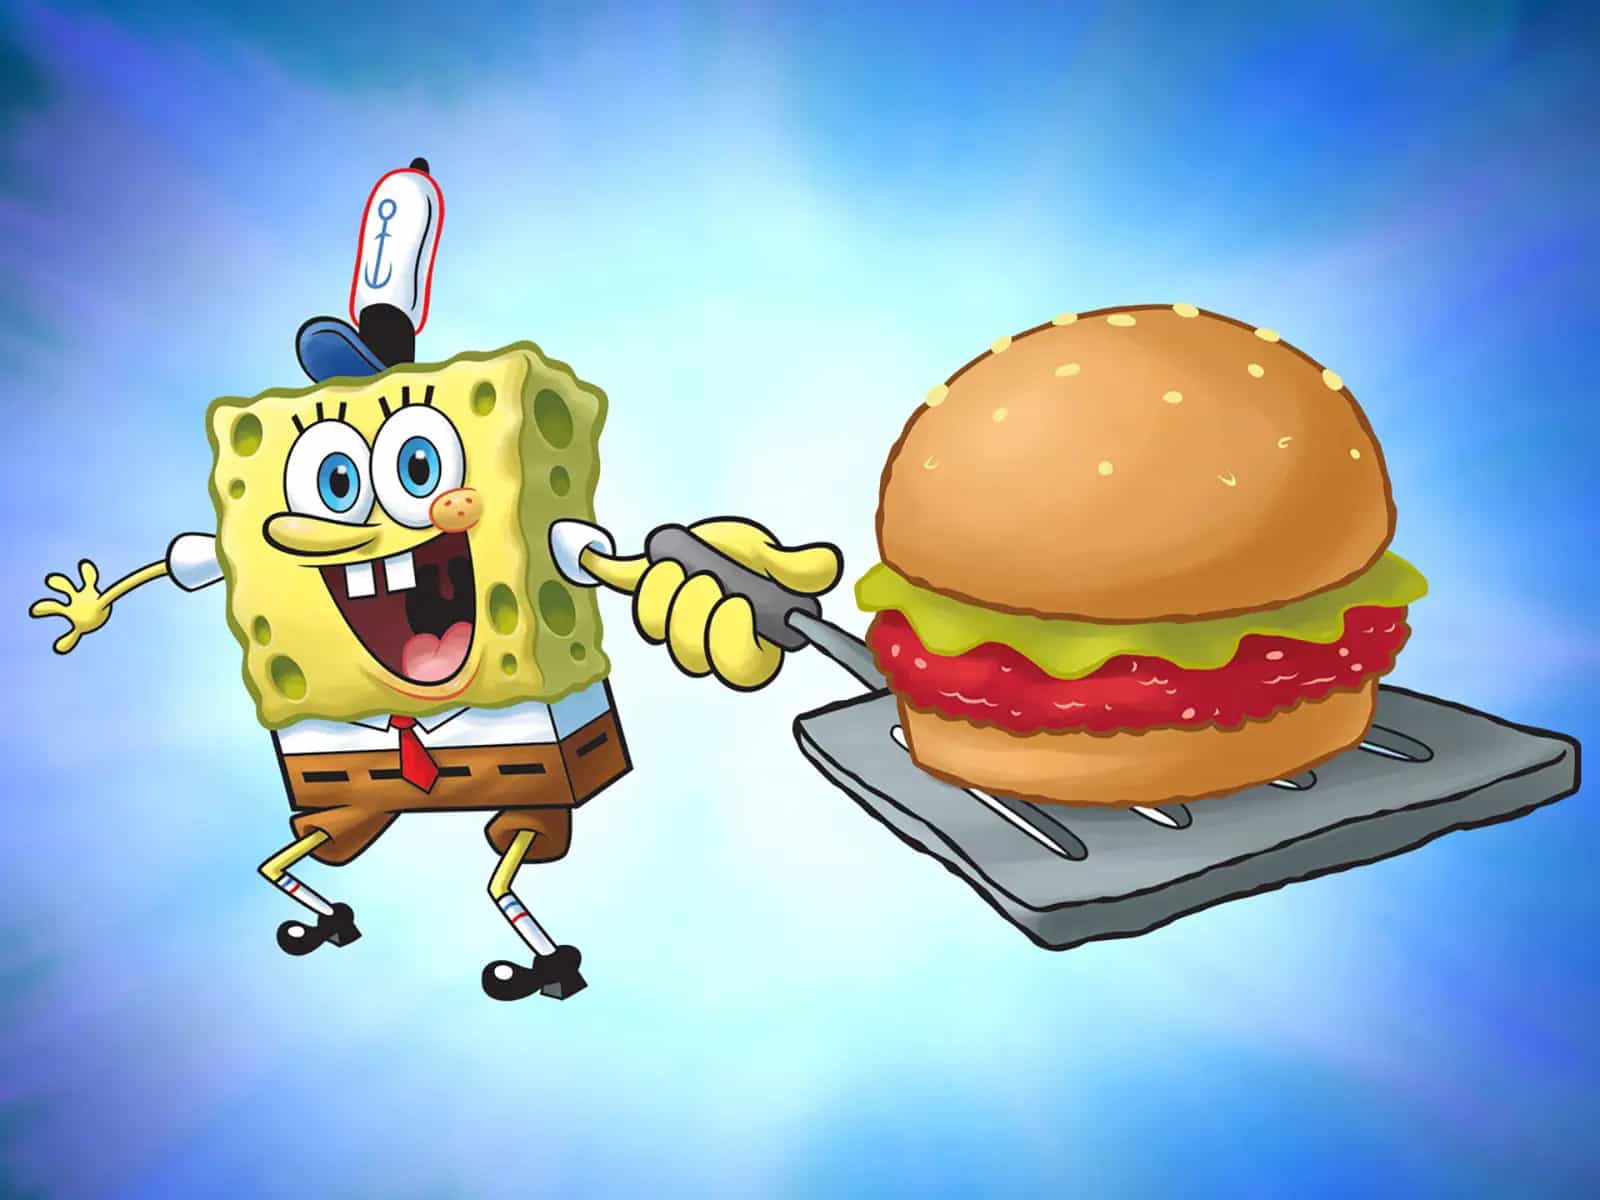 La ricetta segreta del Krabby Patty di Spongebob